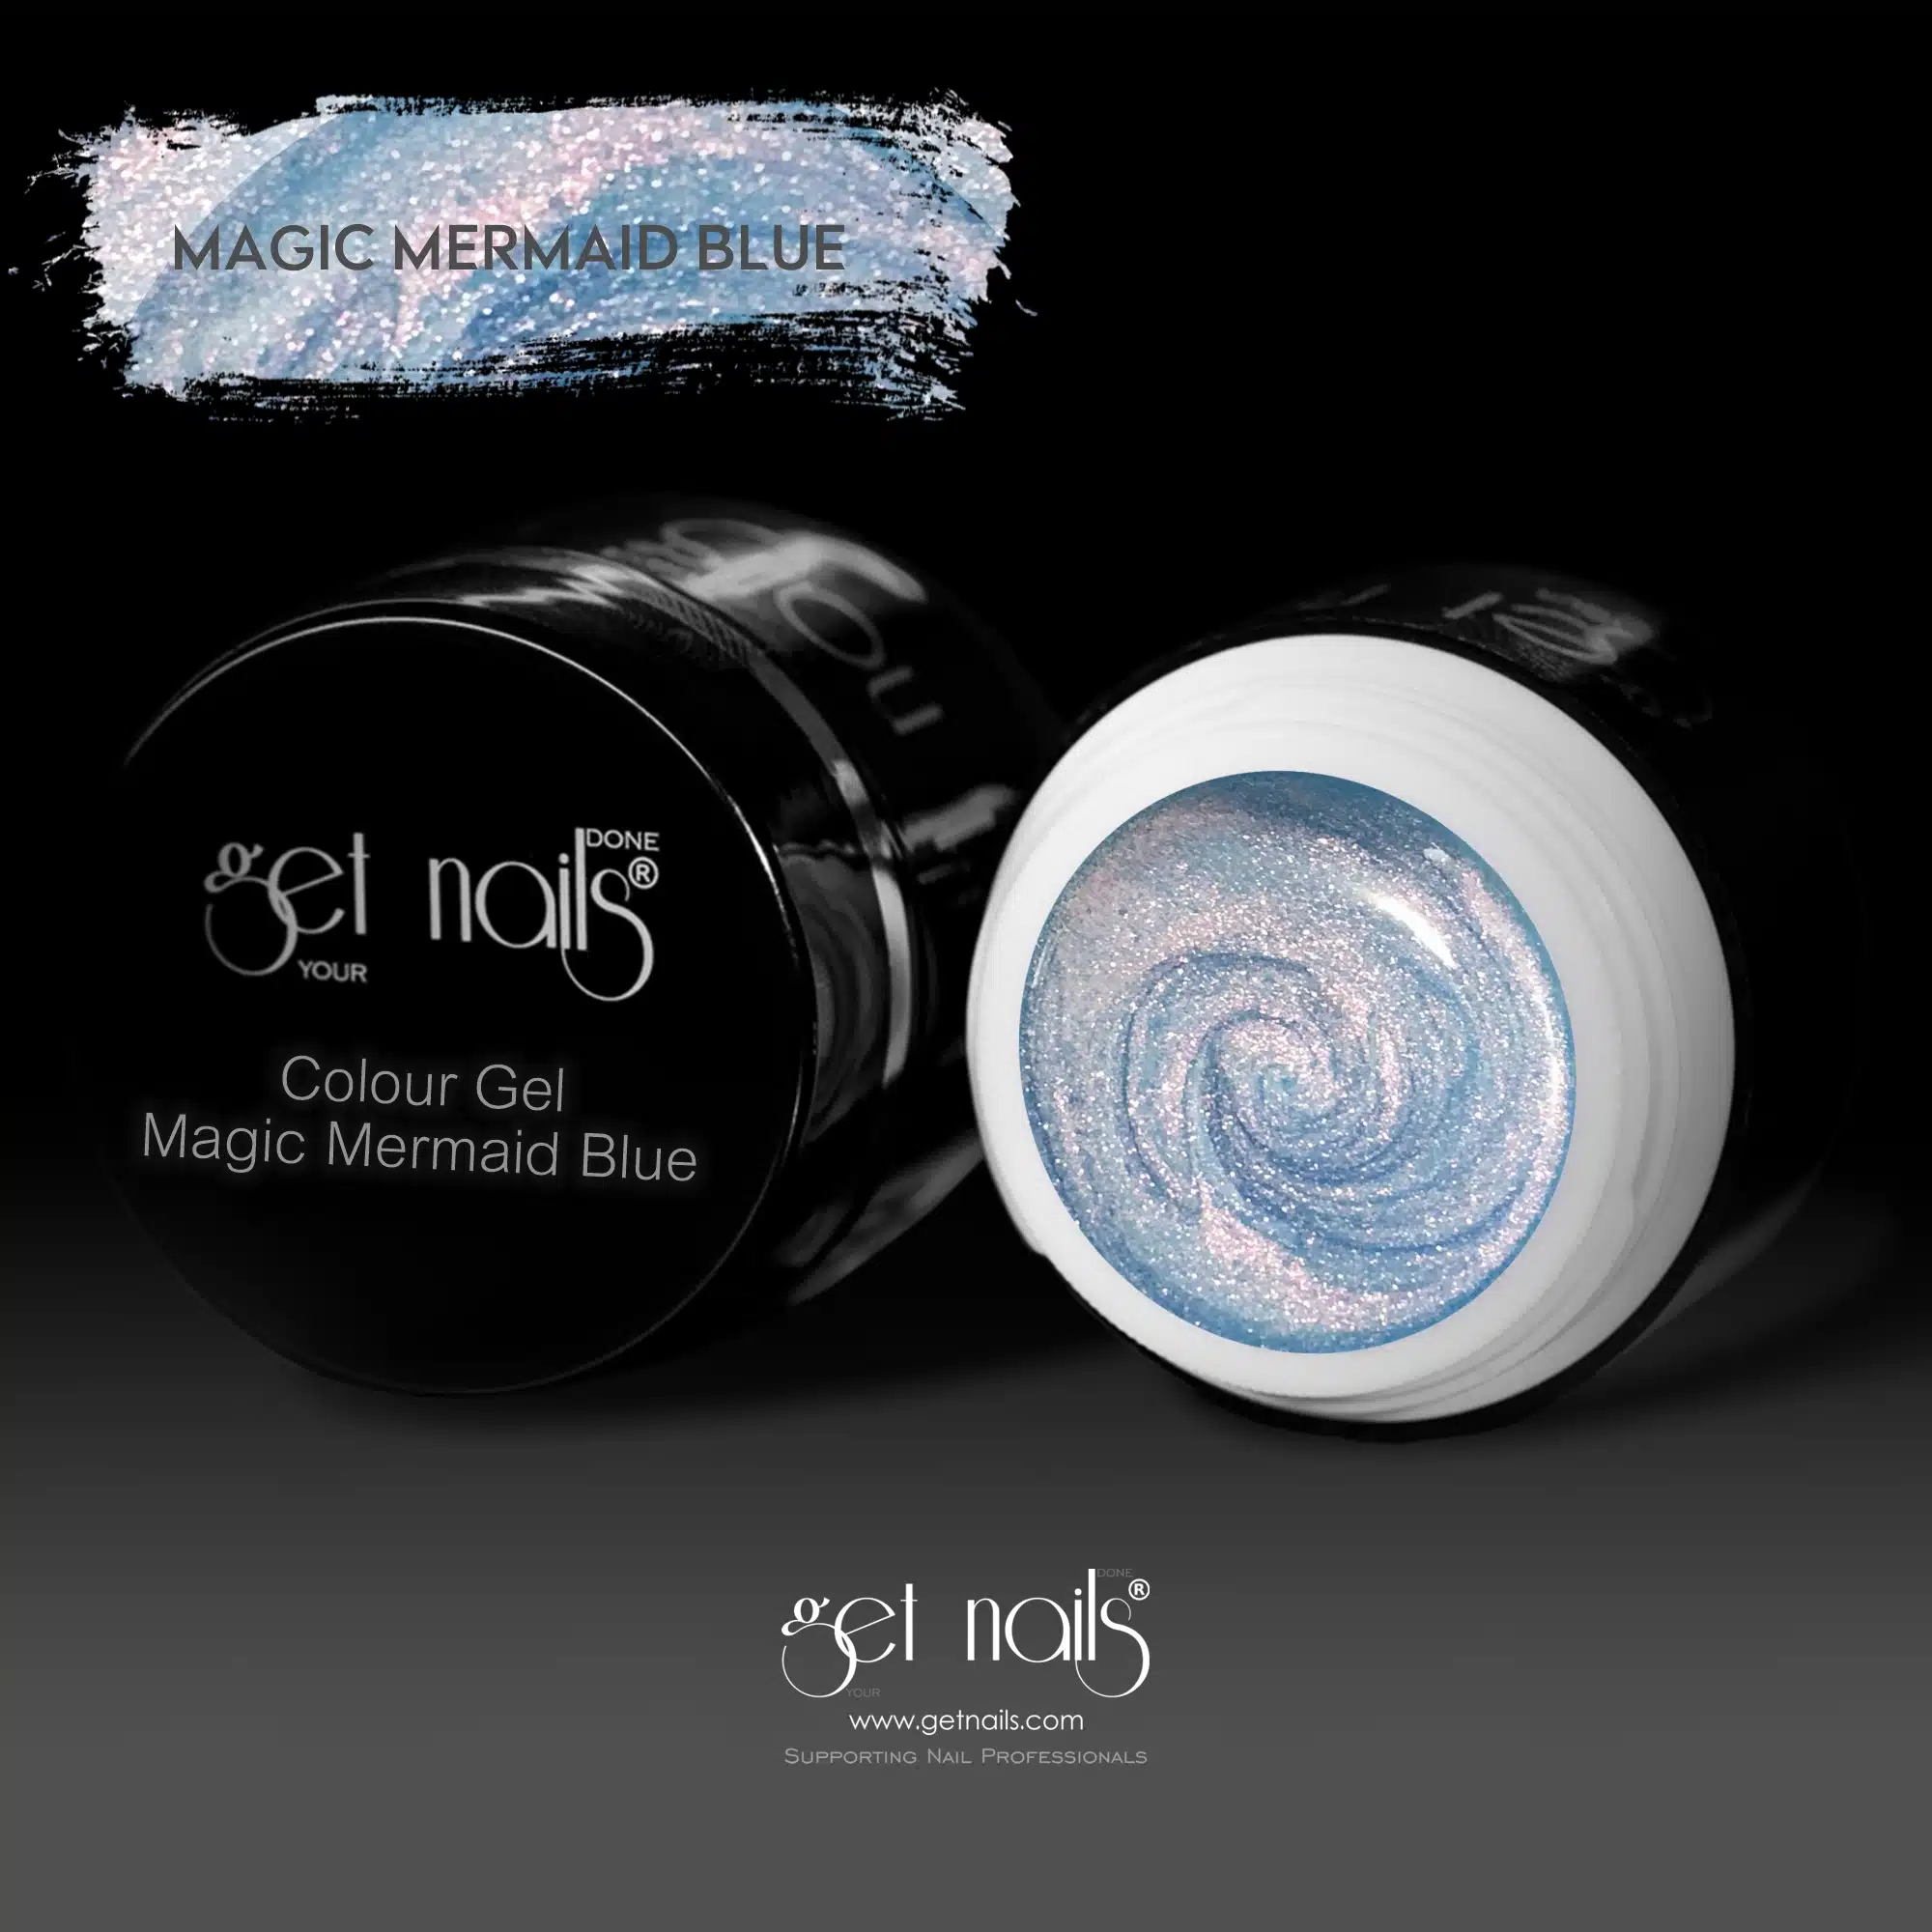 Get Nails Austria - Цветной гель Magic Mermaid Blue 5g